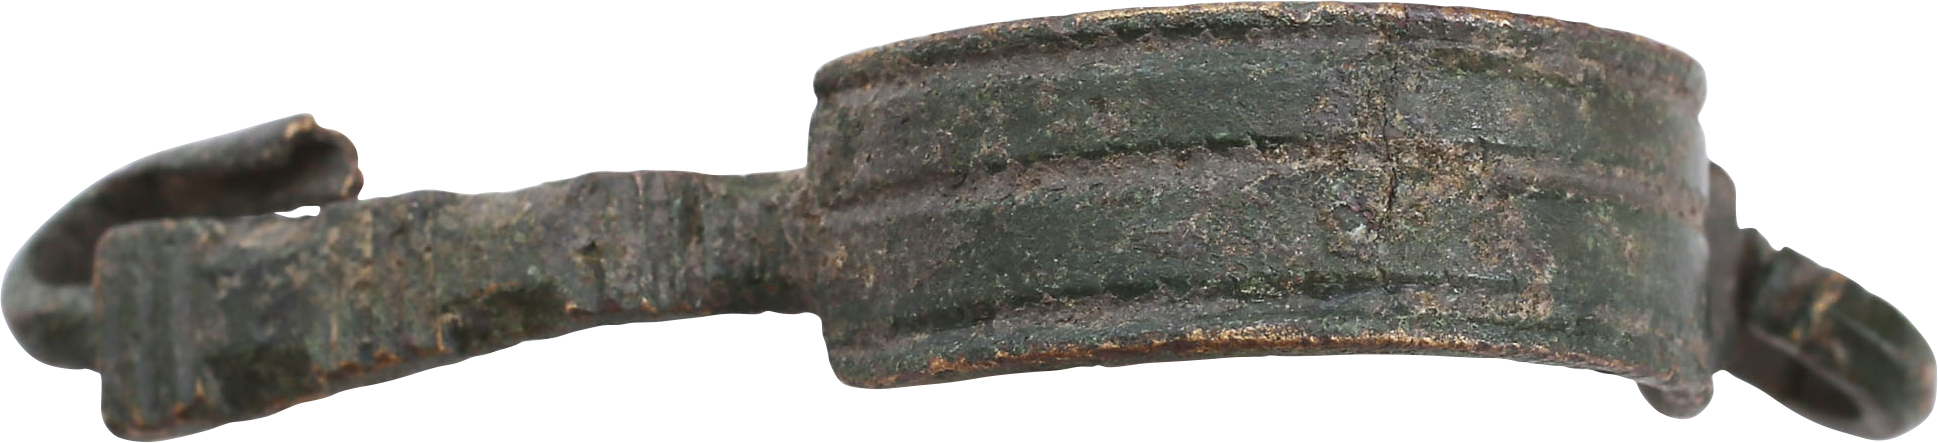 ANCIENT ROMAN BROOCH (GARMENT PIN) FIBULA. - Fagan Arms